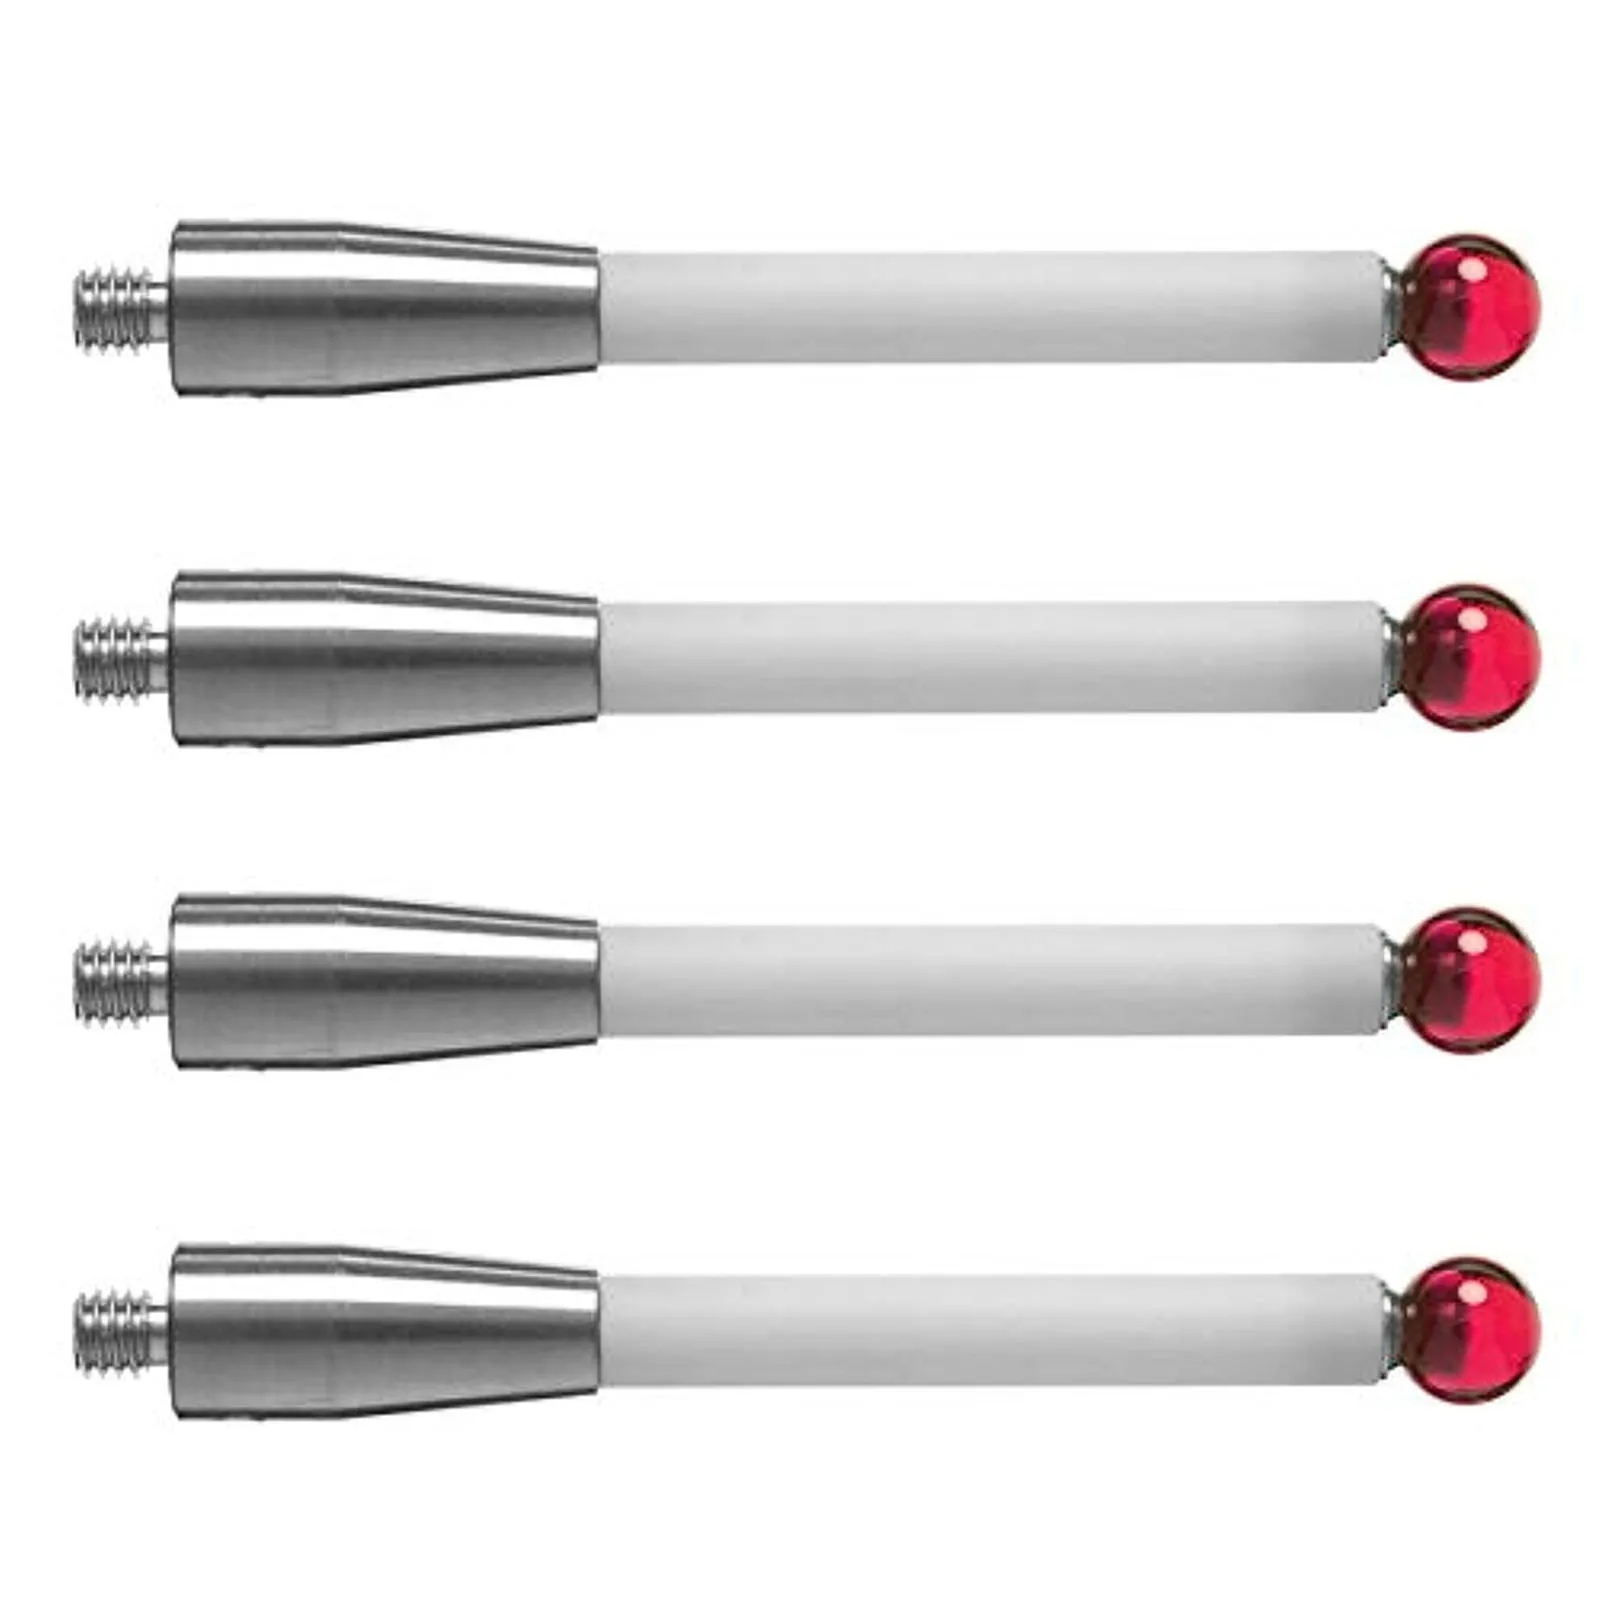 

Durable Cmm Probe Stylus for CMM Machine Tools M4 Thread Shank 6mm Diameter Red Gemstones Ball Tips A 5000 3709